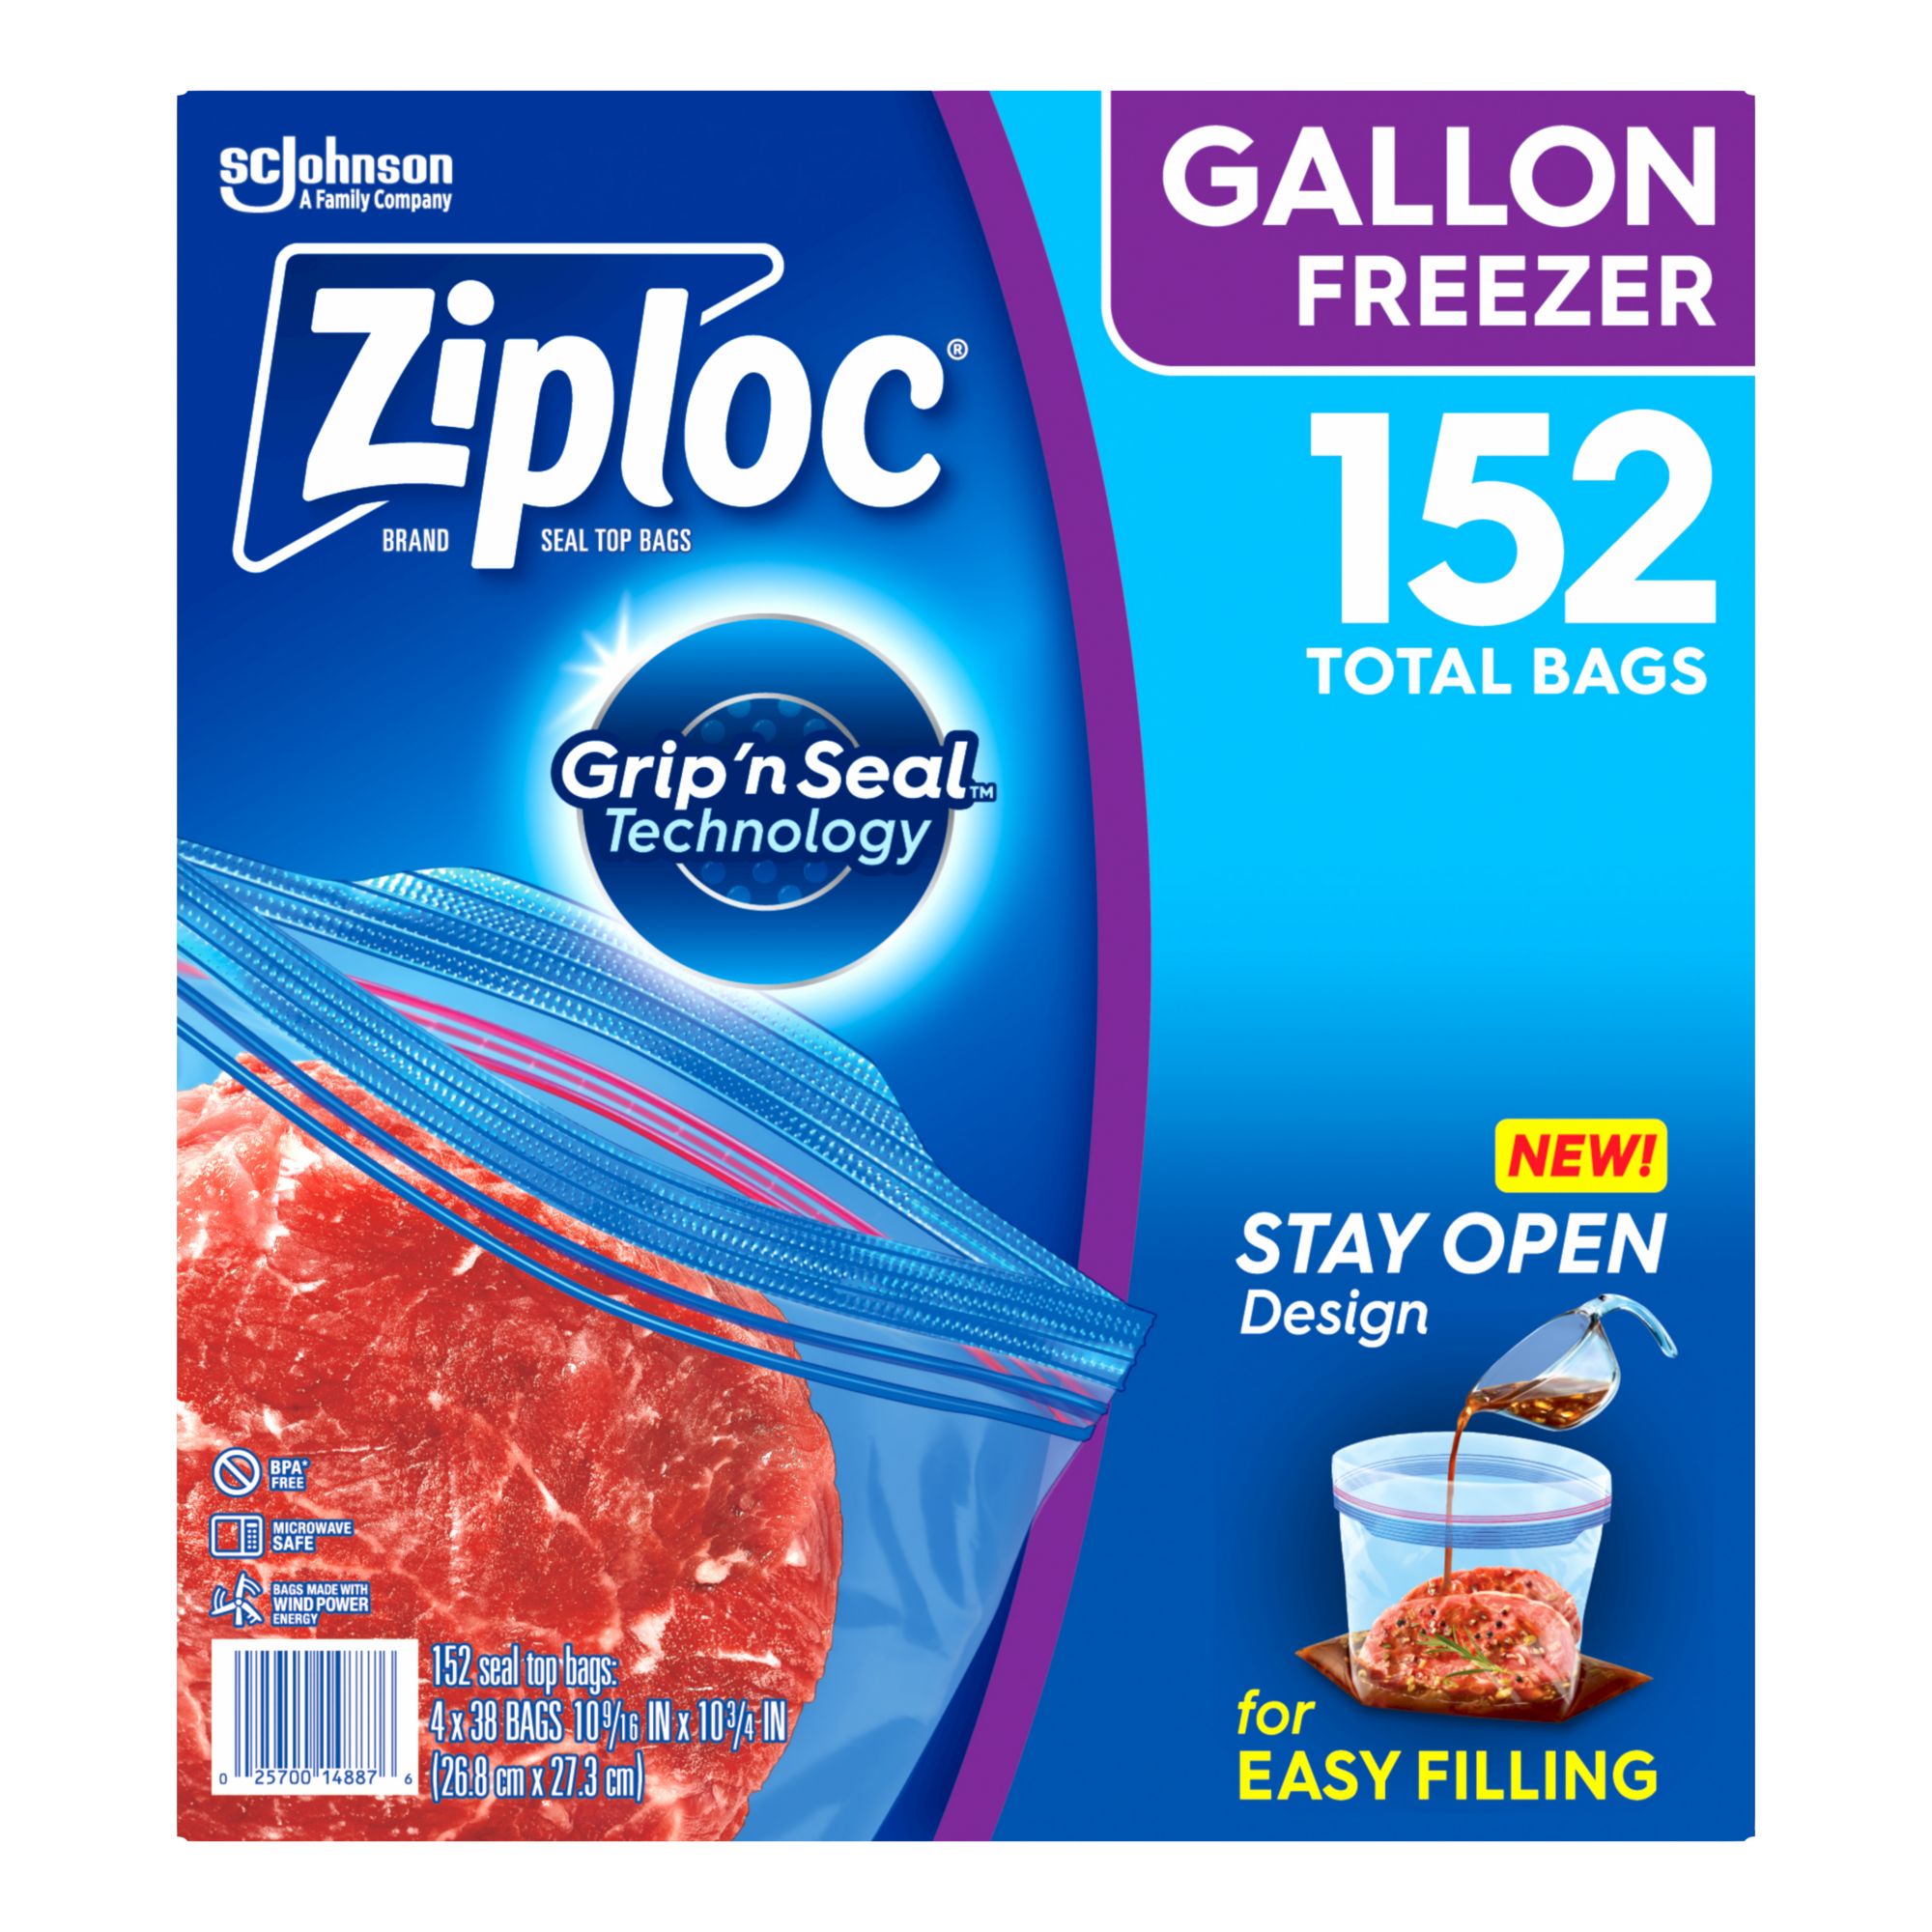 Ziploc Double Zipper Freezer Gallon Bags - Total: 152 Bags (4 x 38 Ct.)